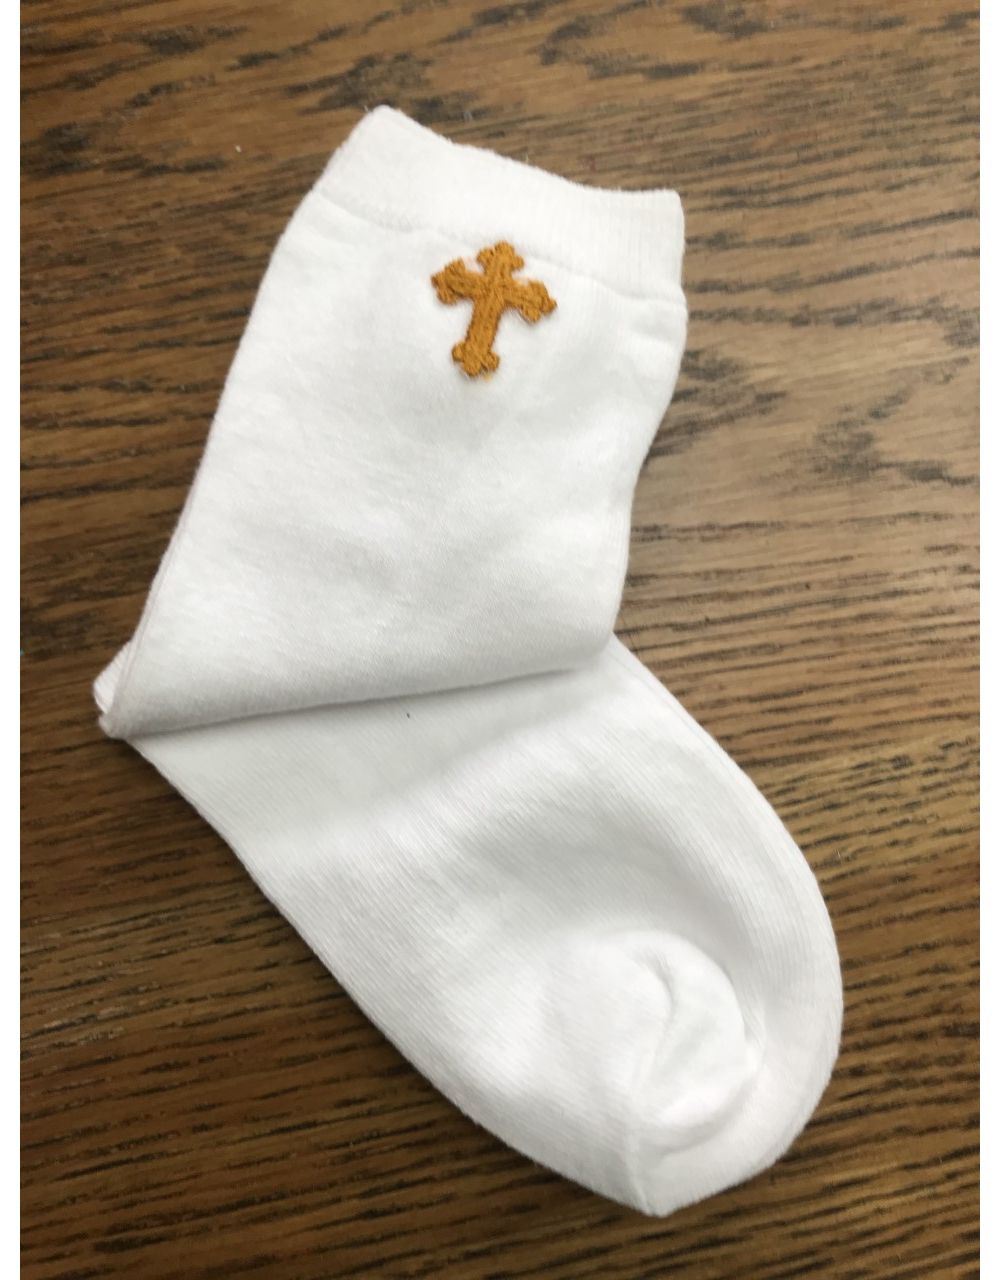 Boys white Communion Socks with Gold Cross